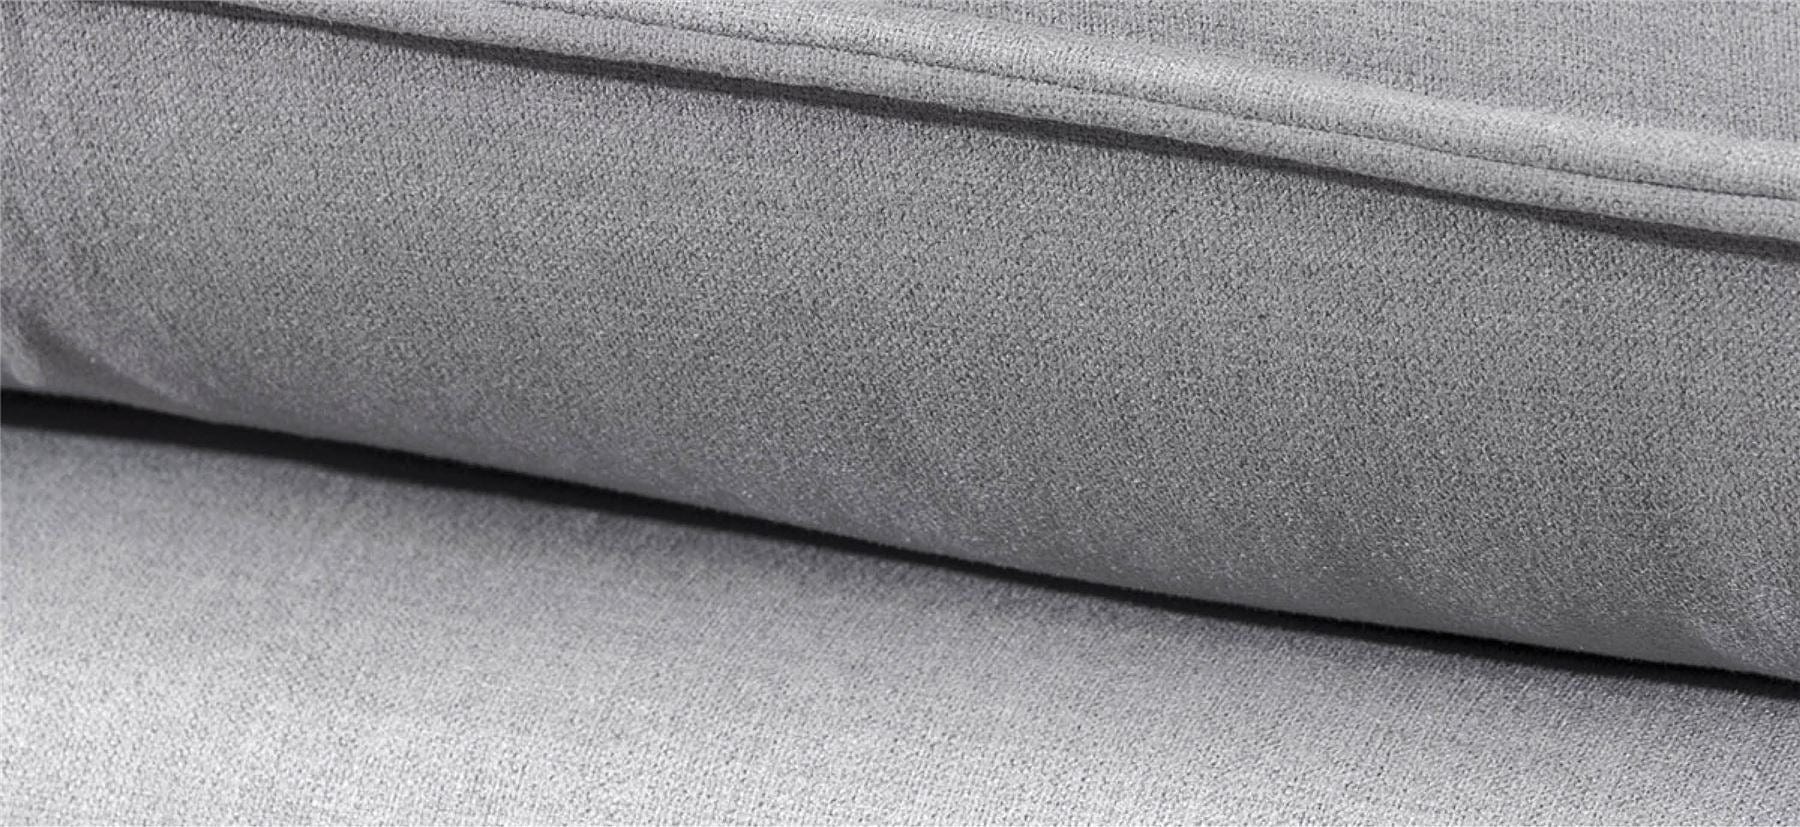 Quatropi Rachel Grand U Shape Oversize Corner Modular Sofa Many Fabrics 3.64 x 3.75m